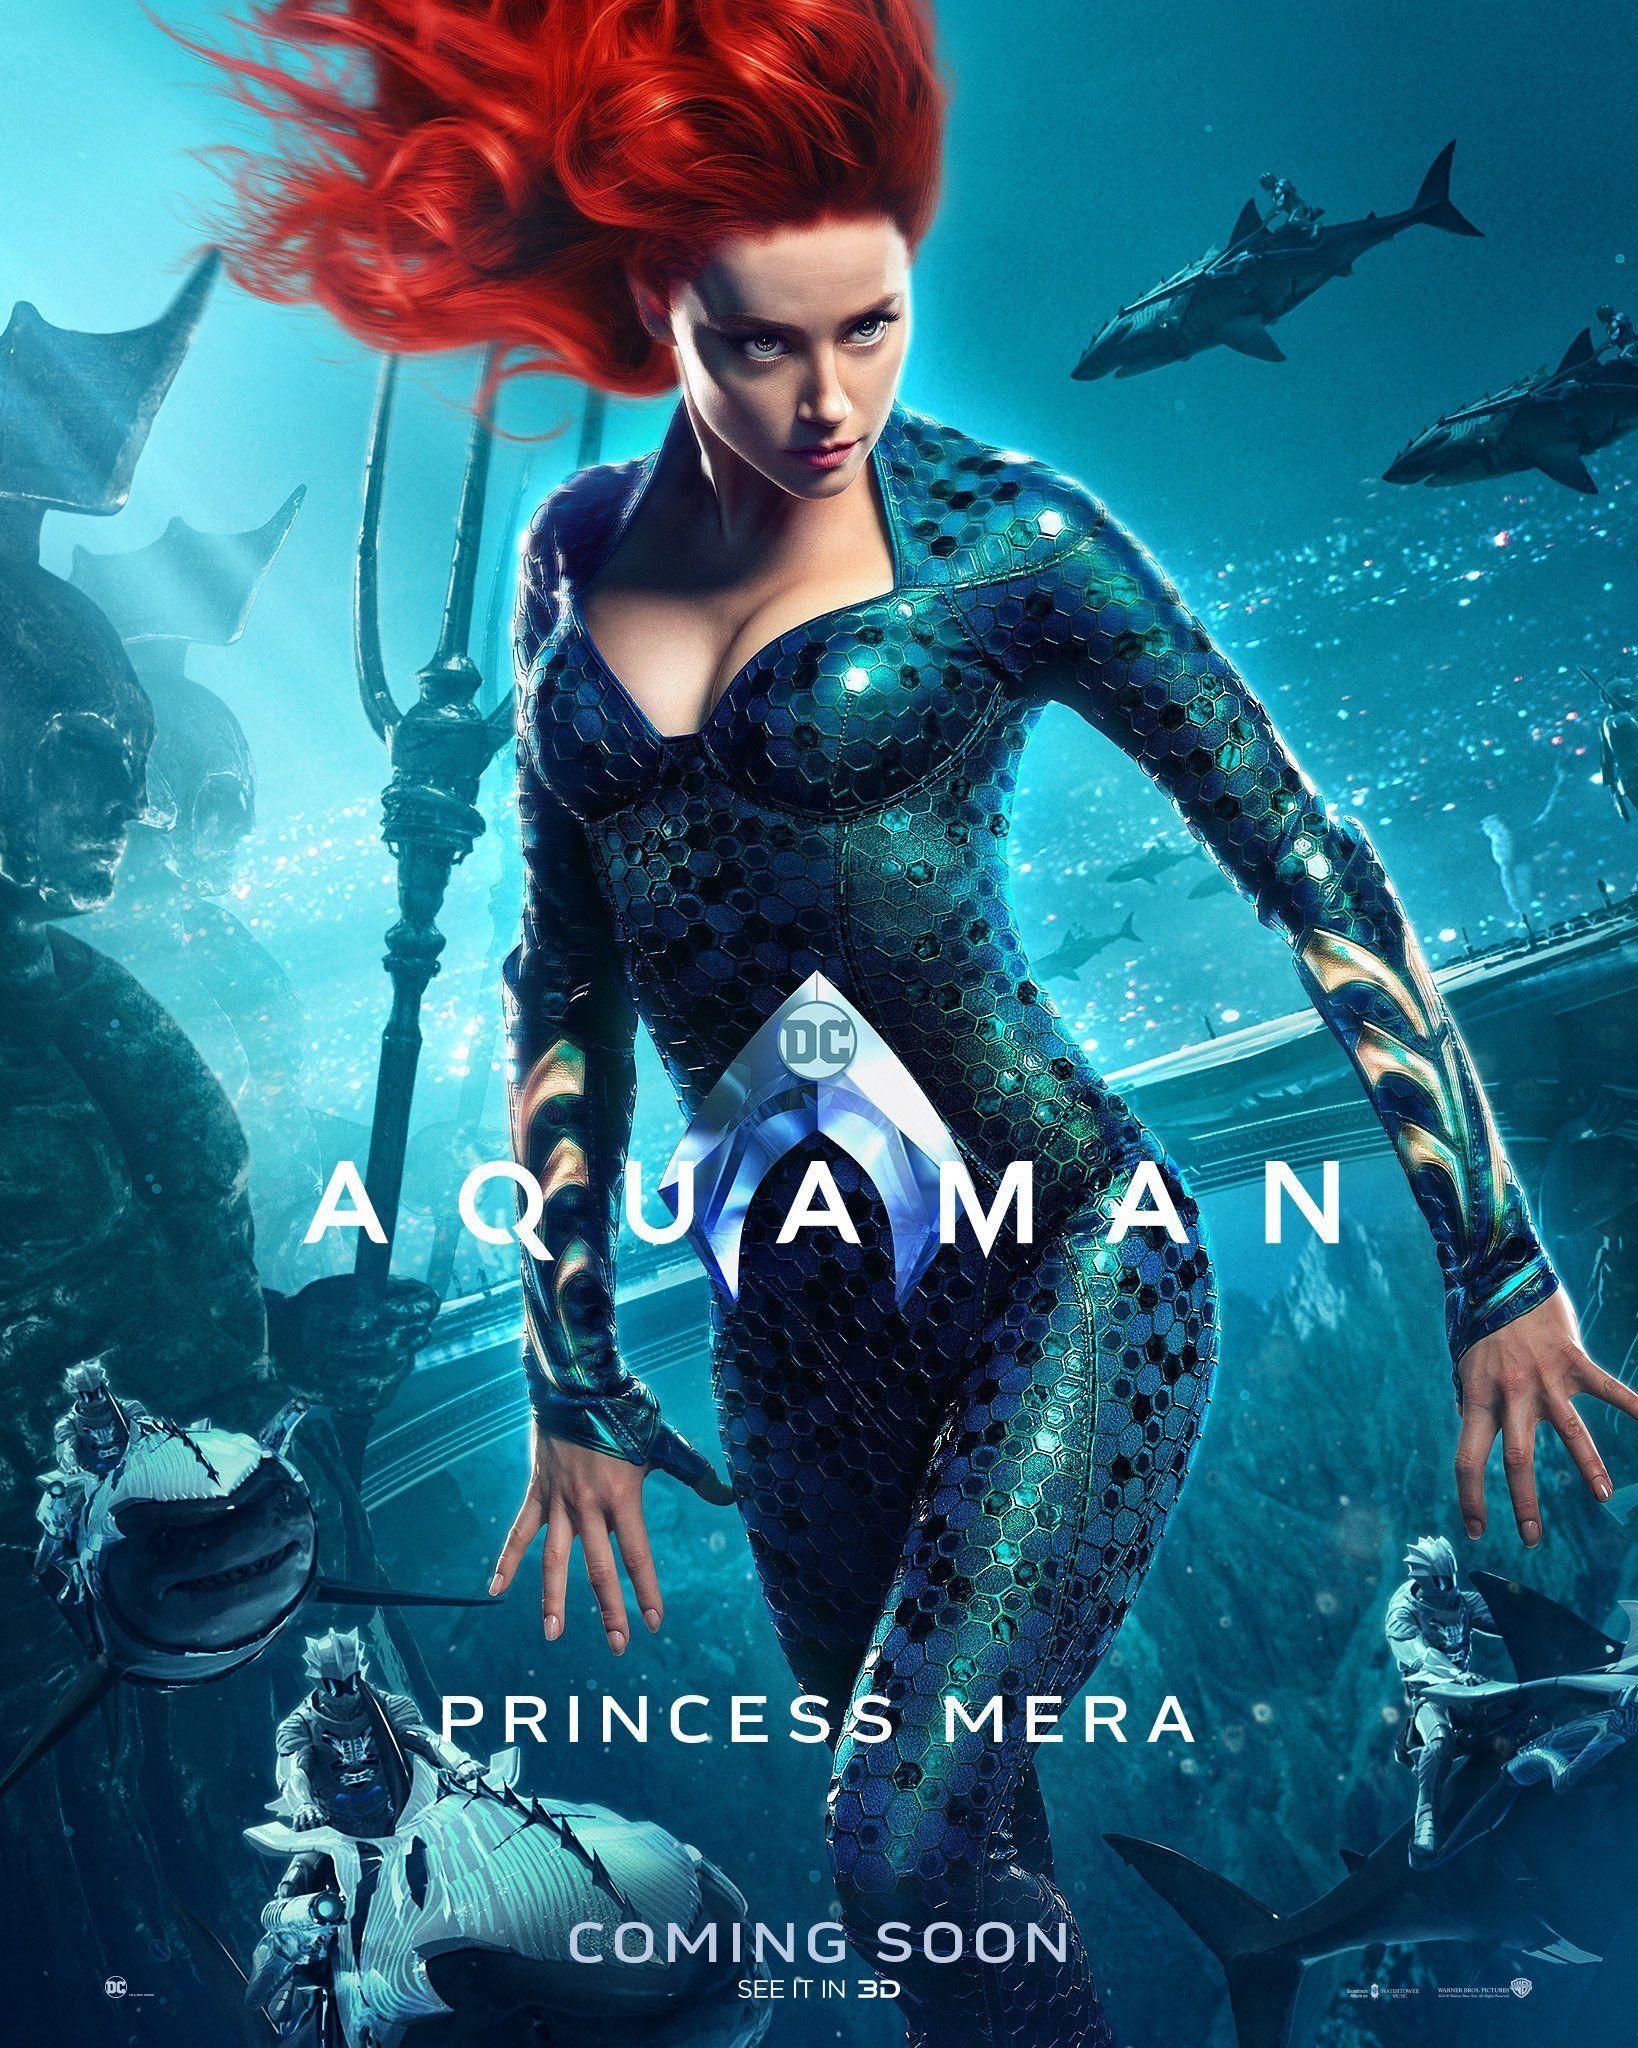 Aquaman 2 HD Wallpaper 1678 3840x2400 px  PickyWallpaperscom